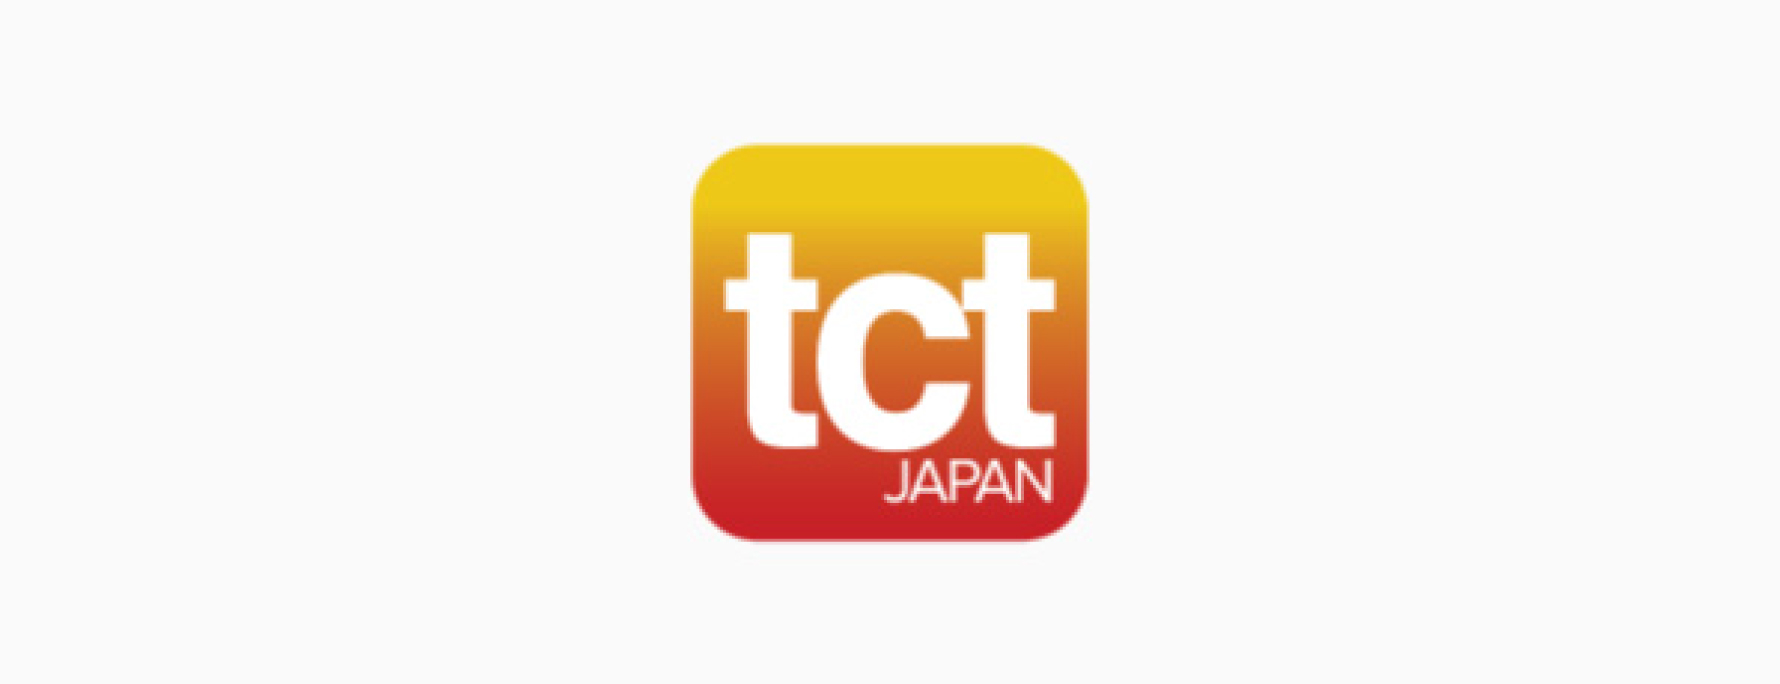 TCT Japan 2021